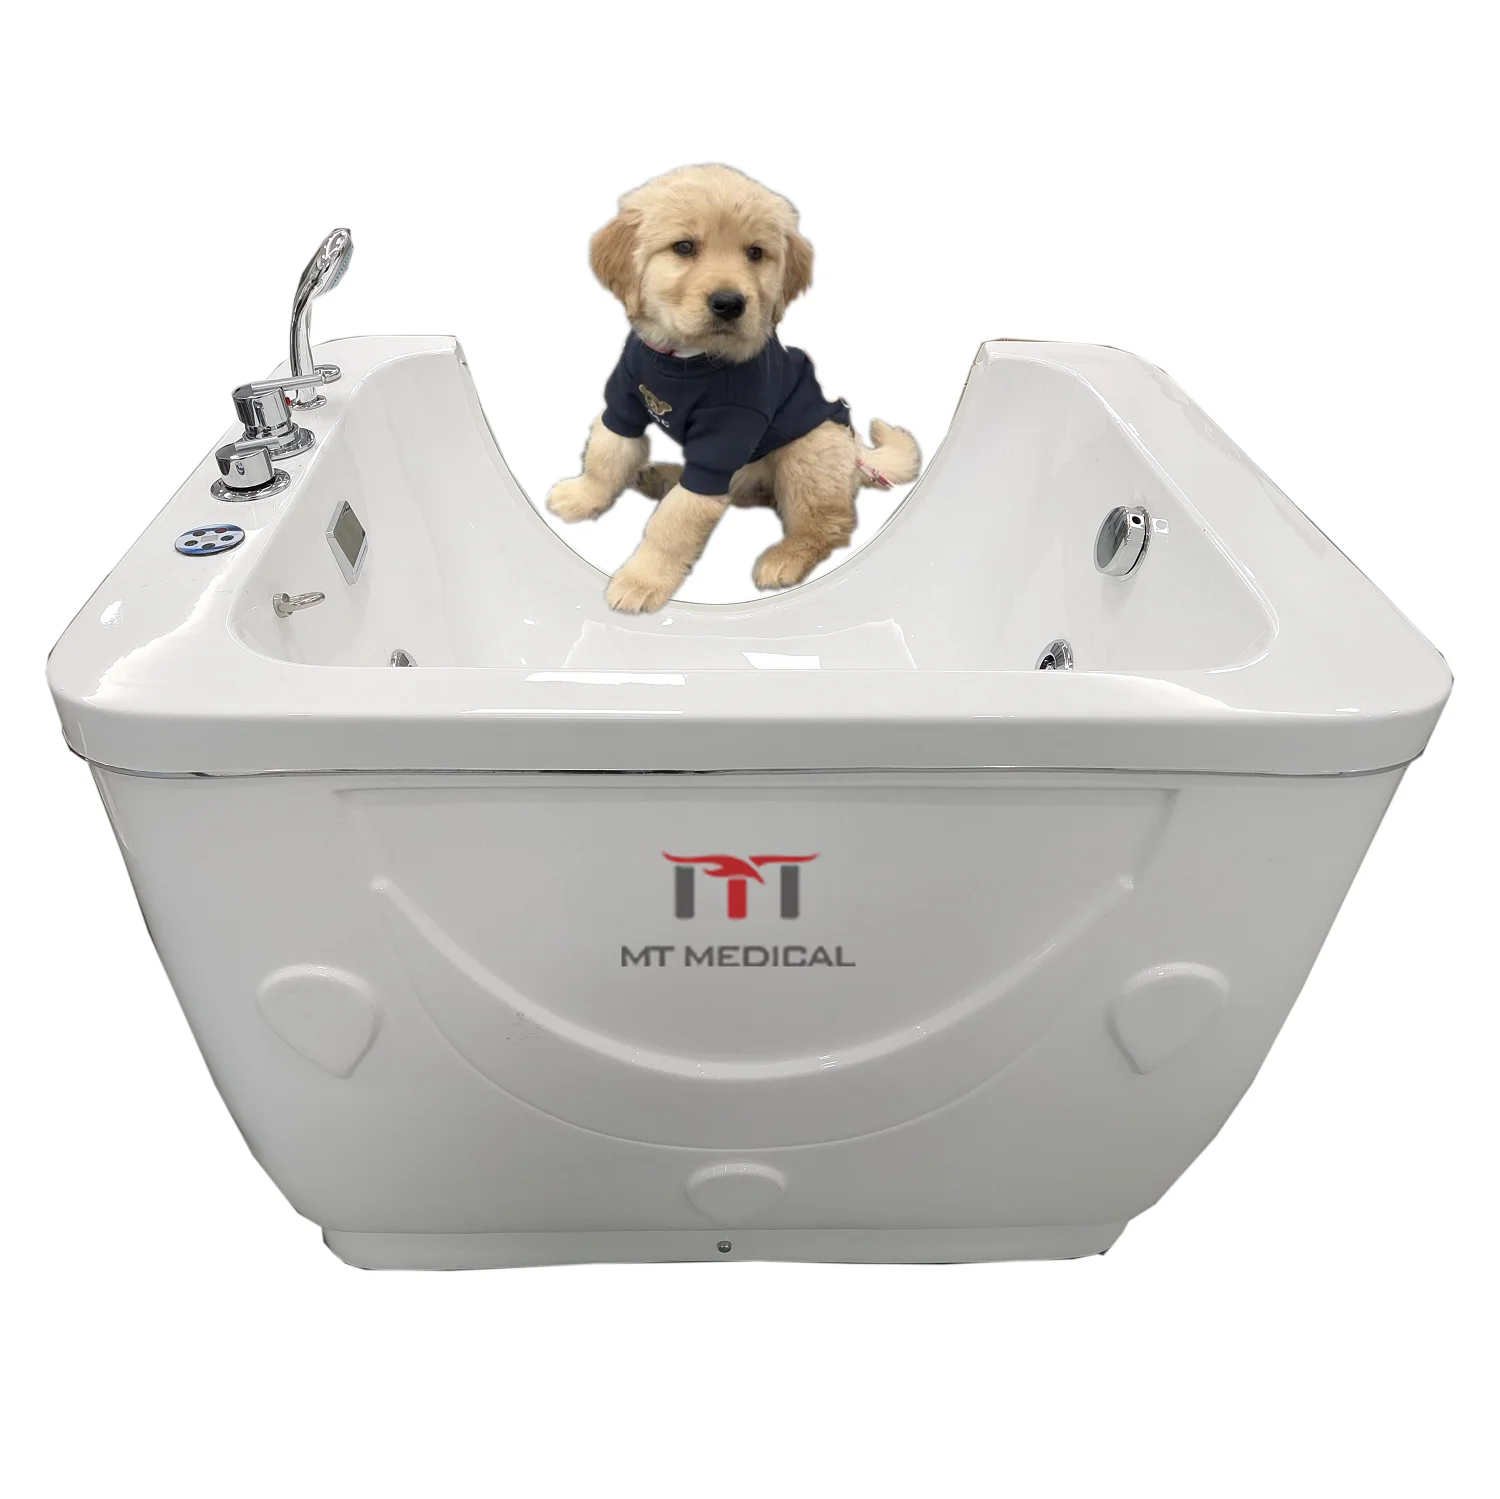 

MT Medical best price wholesale pet grooming products /dog spa bathtub /pet washing bath tub